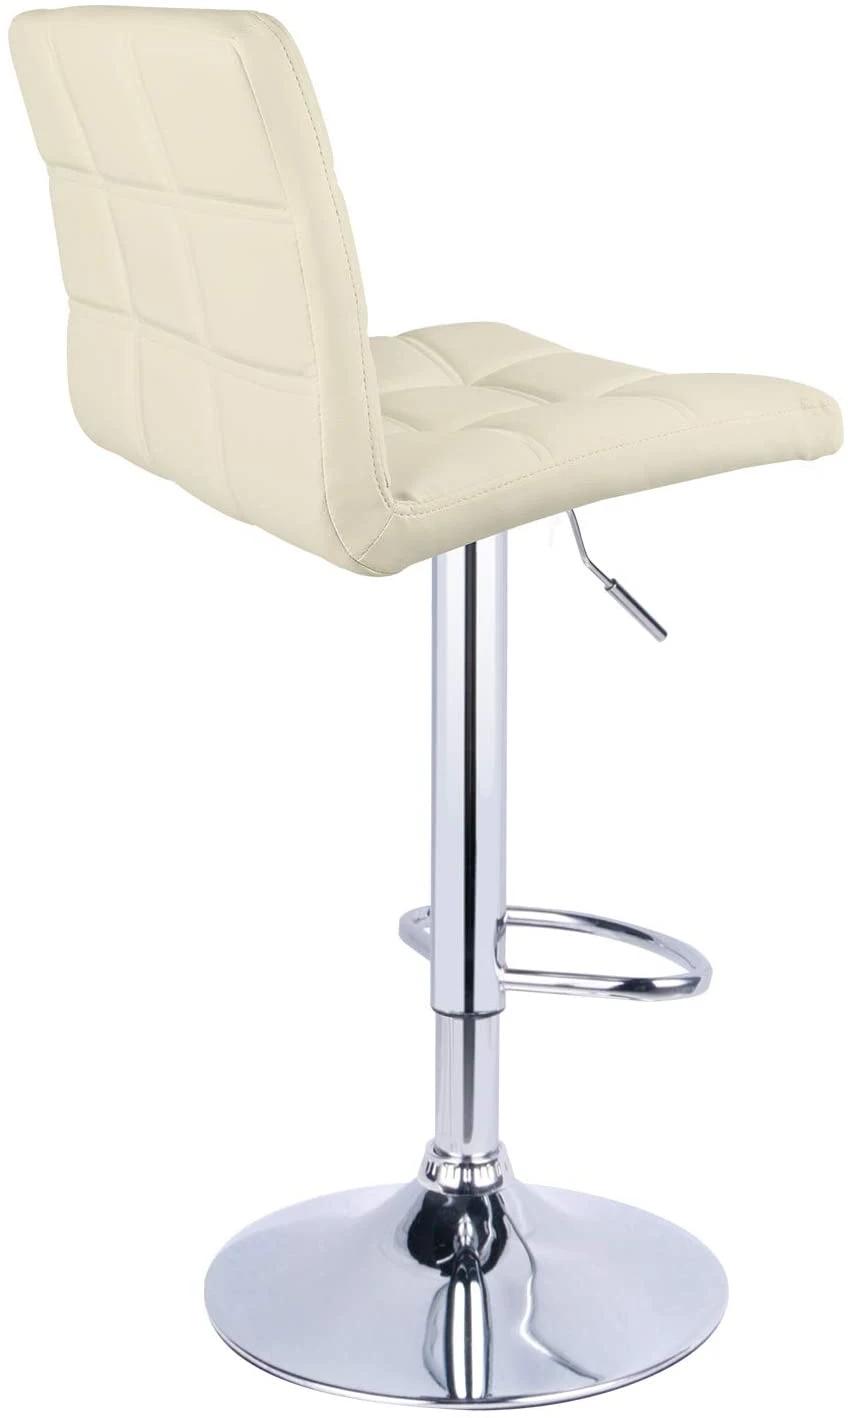 Light Luxury Simple Bar Chair Reception Bar Chair Bar Stool Home Lift High Stool High-End Post-Modern Chair